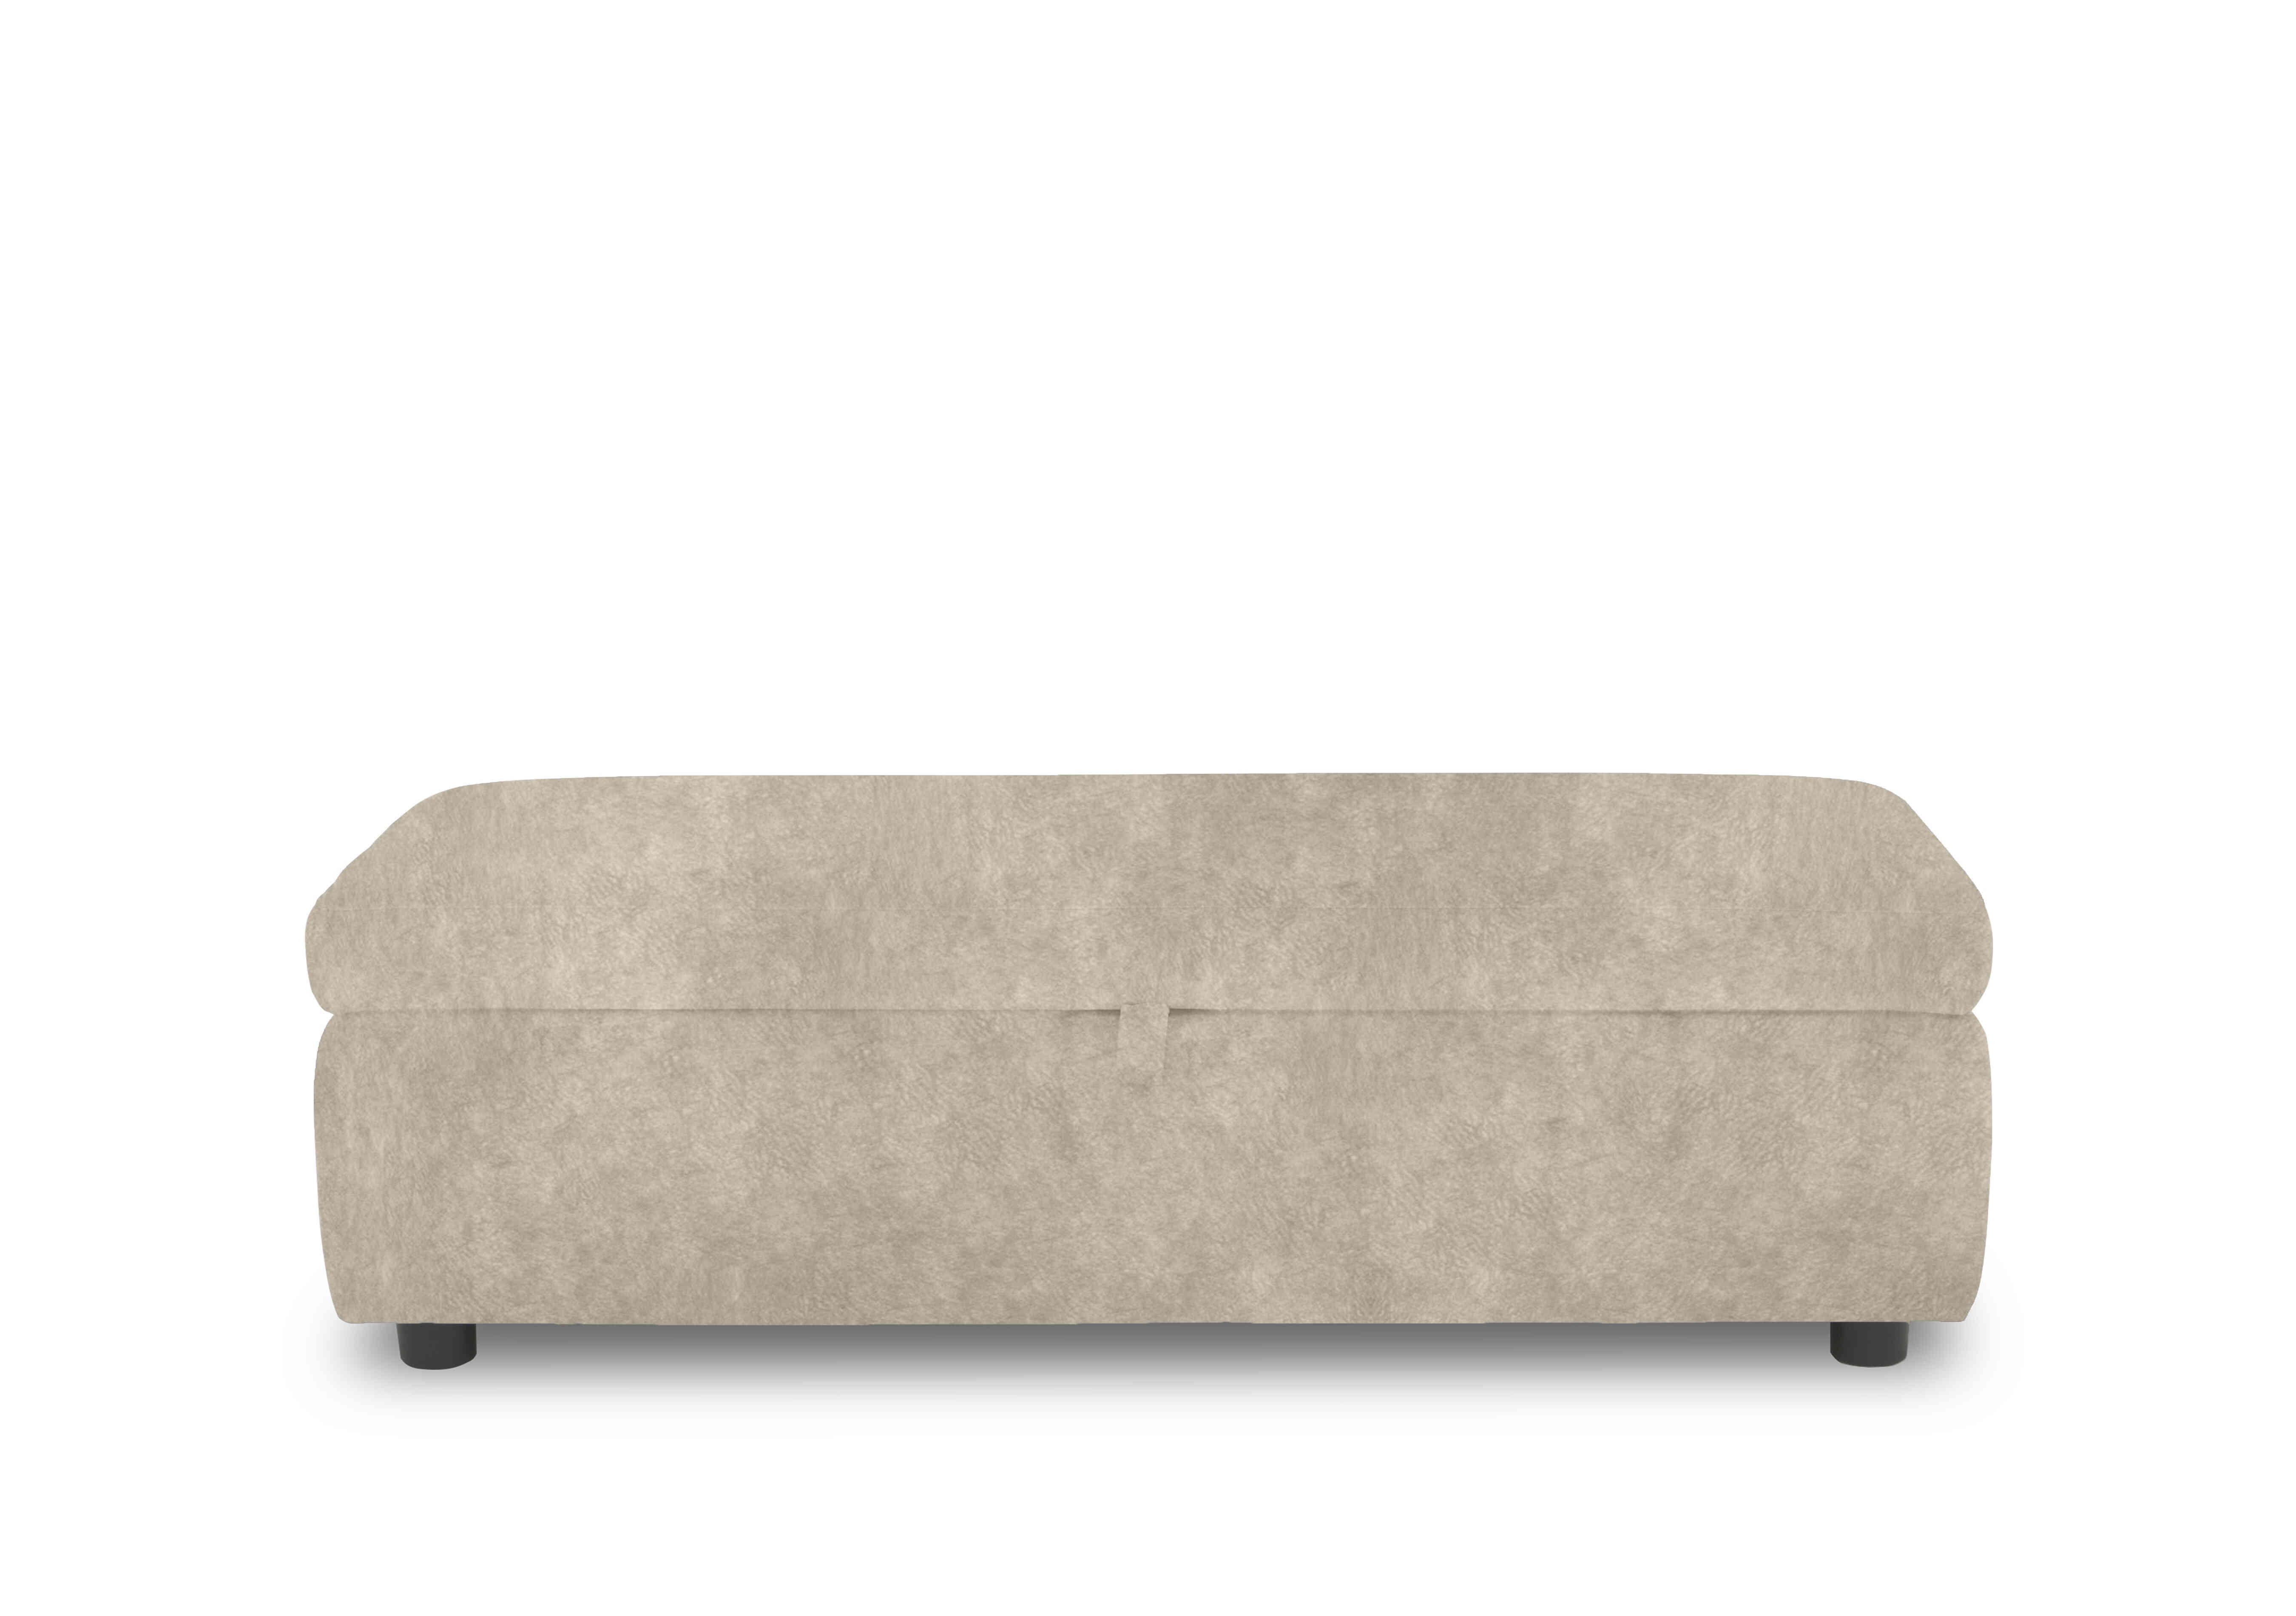 Stark 150cm Fabric Blanket Box in Bfa-Bnn-R26 Cream on Furniture Village